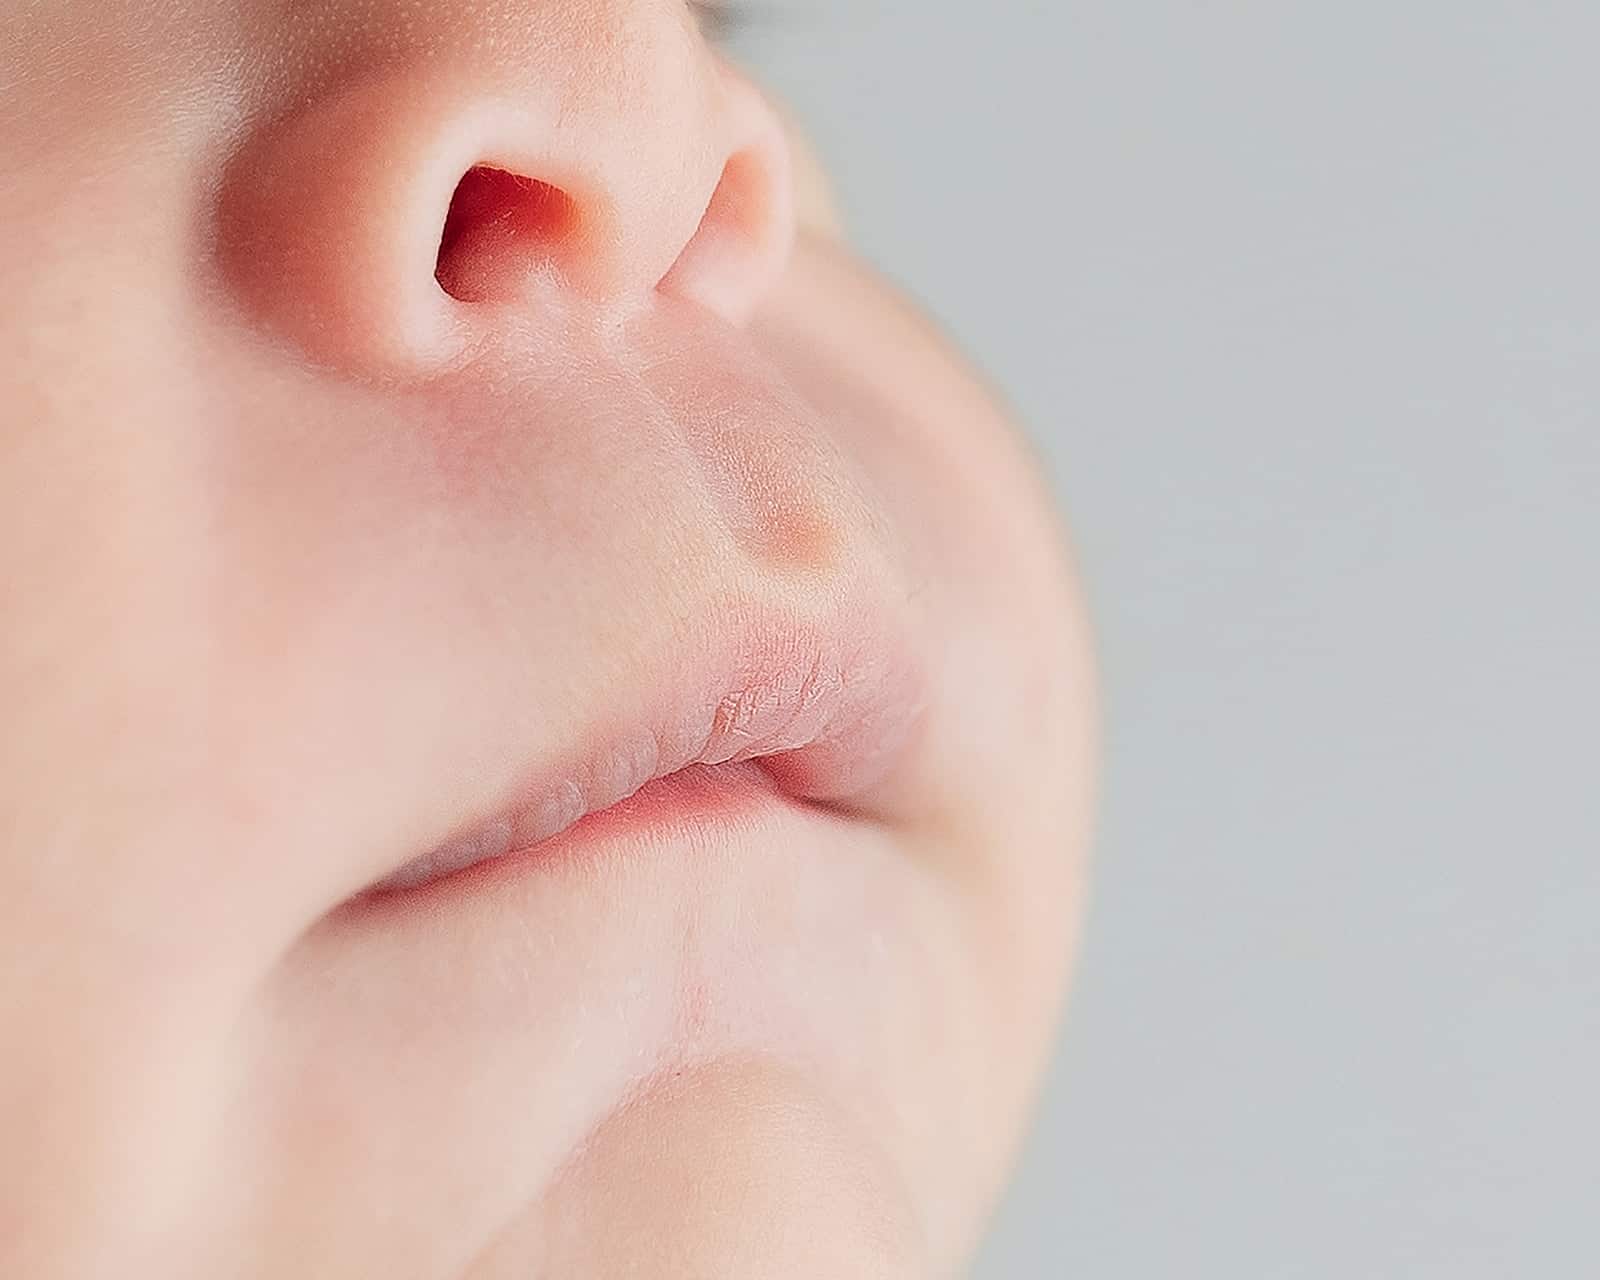 Details of newborn lips and nose ashland birth center